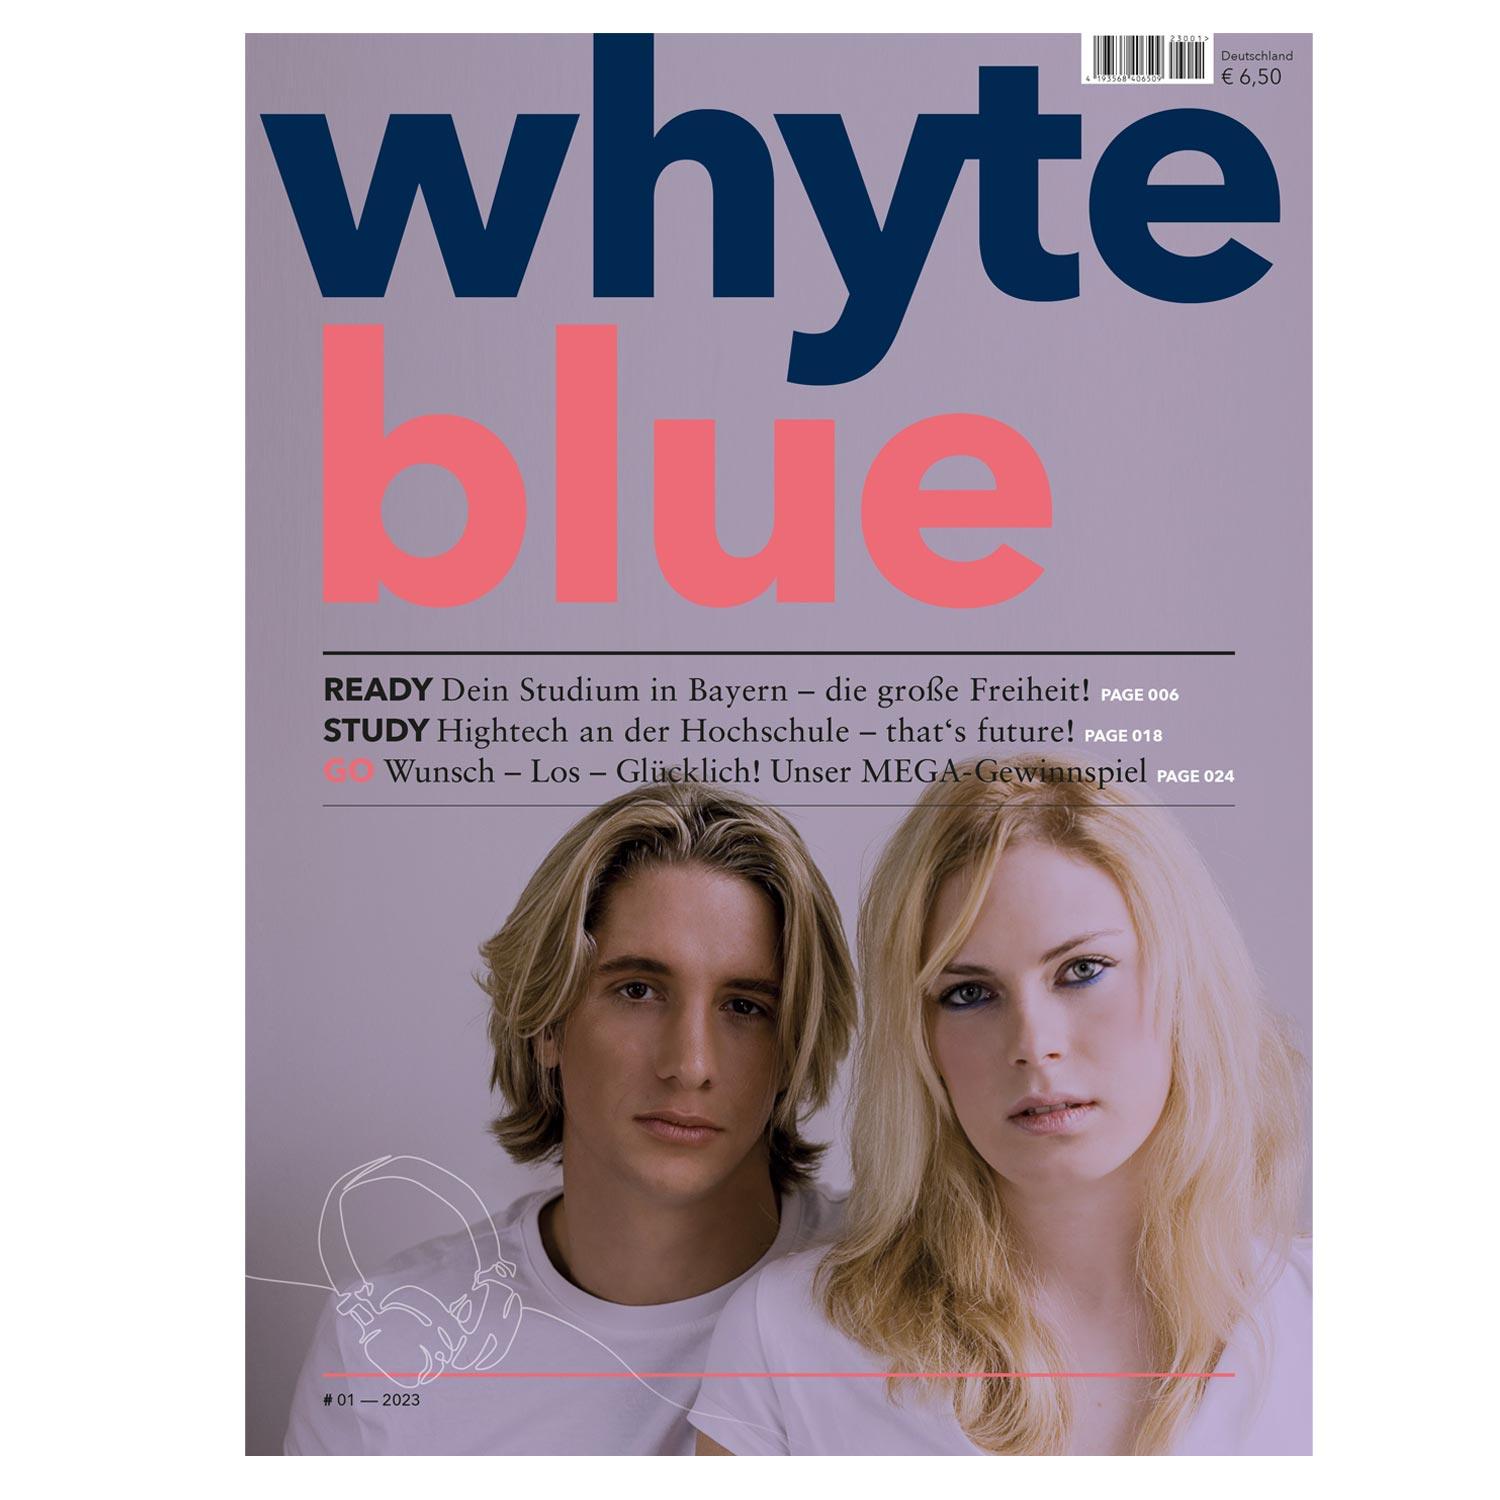 Magazin "whyte blue" Münchner Merkur - bavariashop - mei LebensGfui